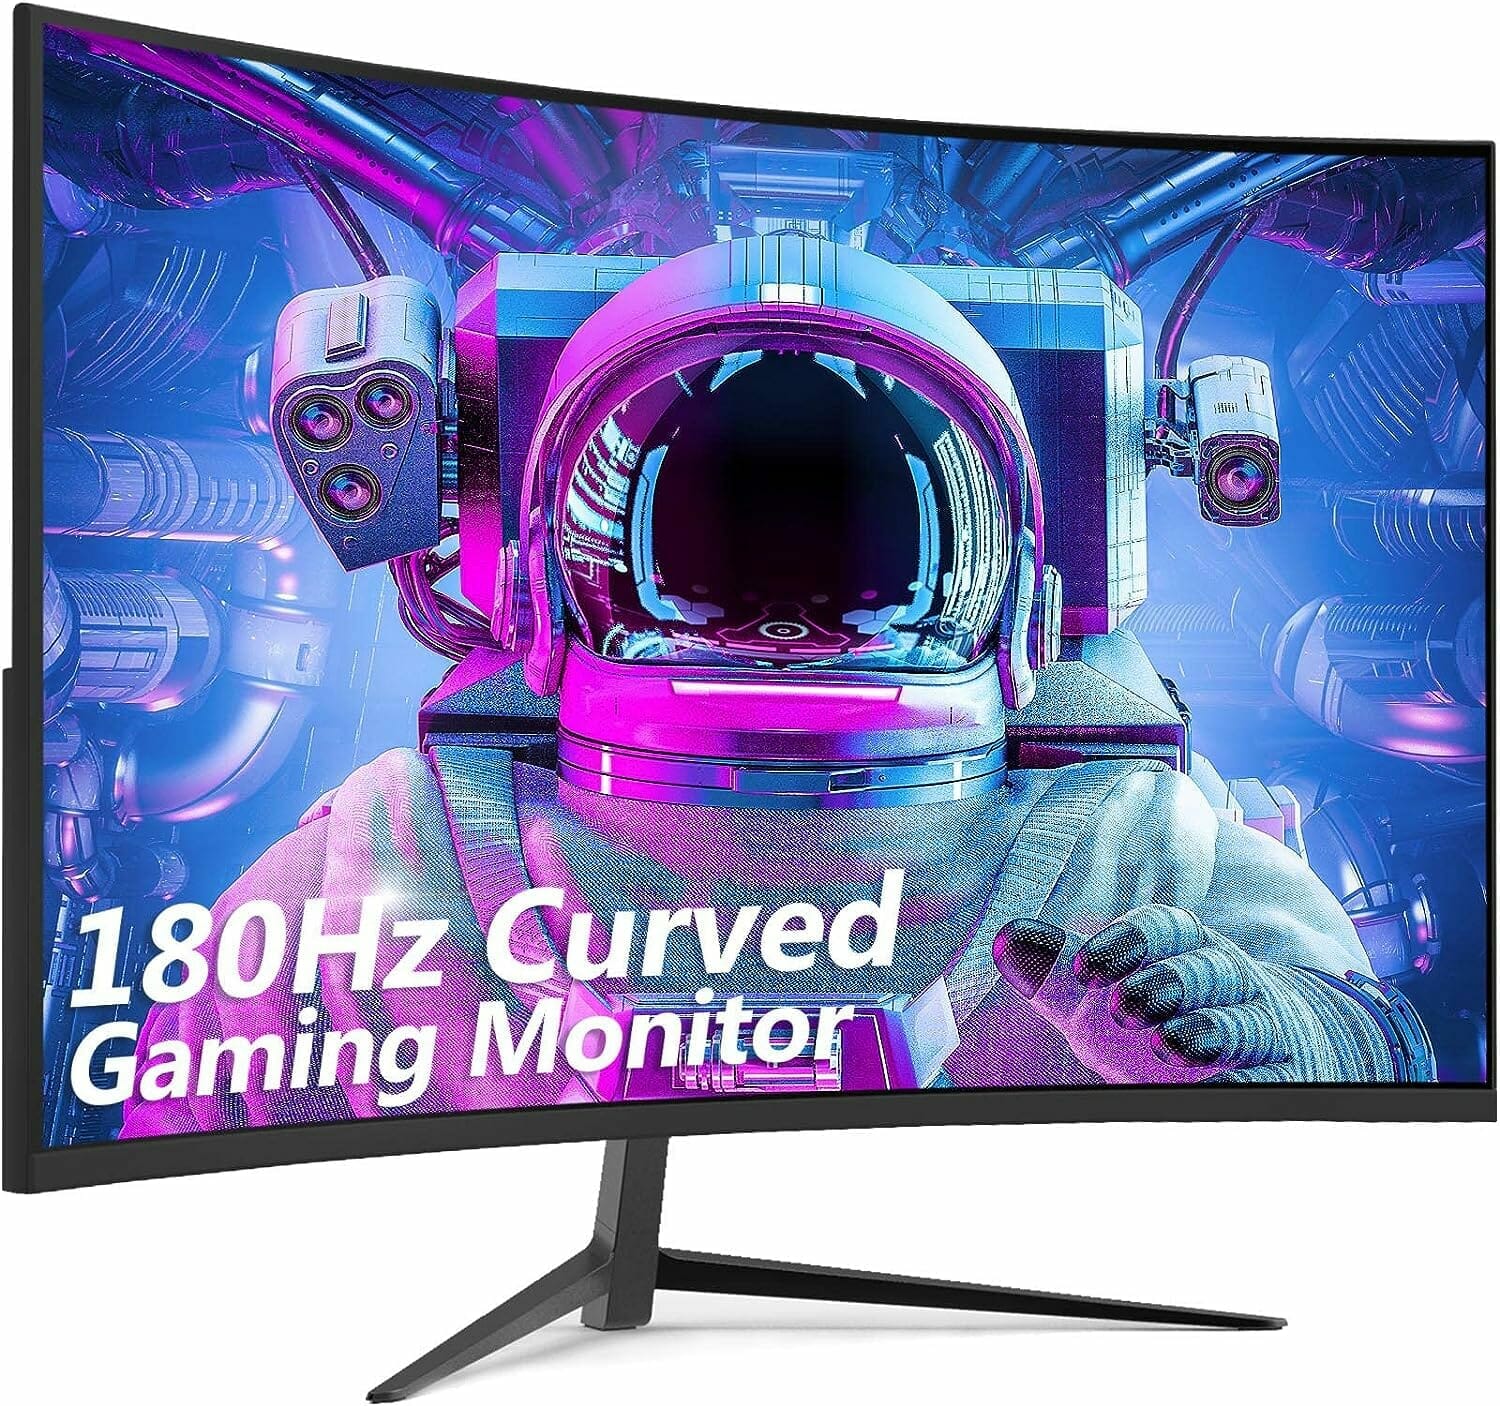 Z-Edge 24 Inch Curved Gaming Monitor Full HD 180Hz/165Hz (DP) 144Hz (HDMI) 1ms MPRT, 300cd/m² Brightness, 1650R Curved Screen, VA, FreeSync, HDMI, DP, Speaker - Black